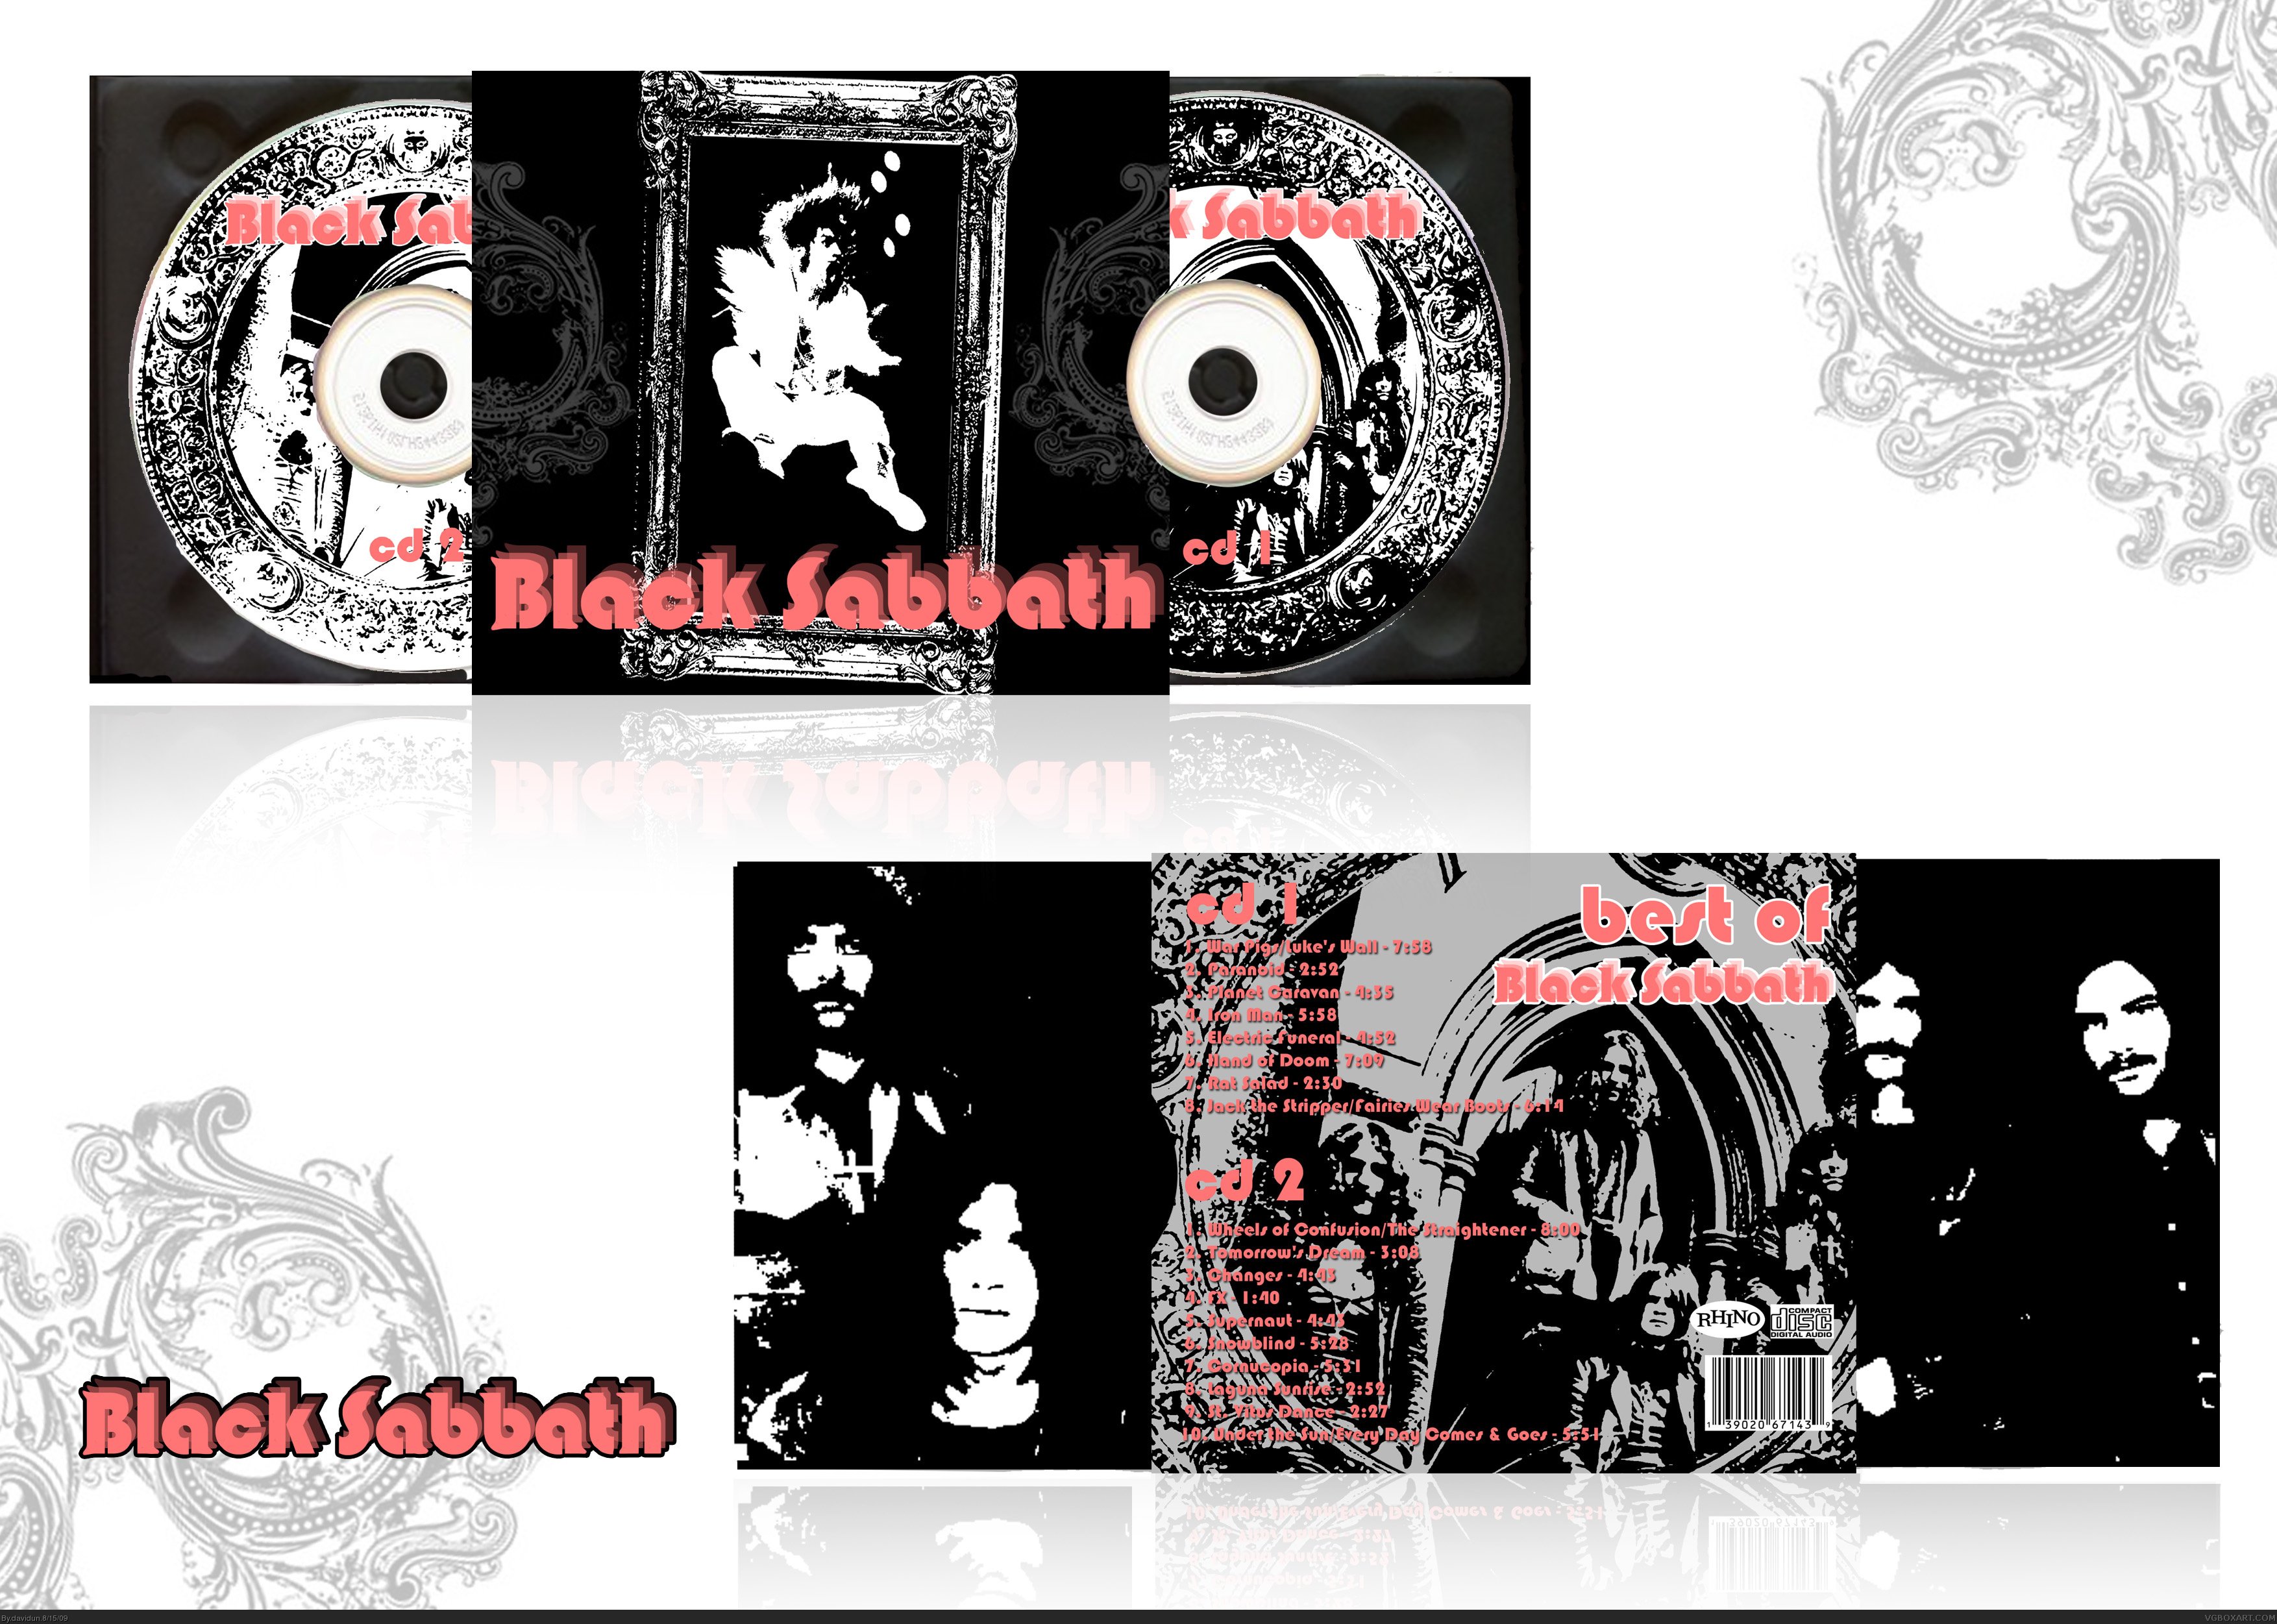 Black sabbath best of box cover